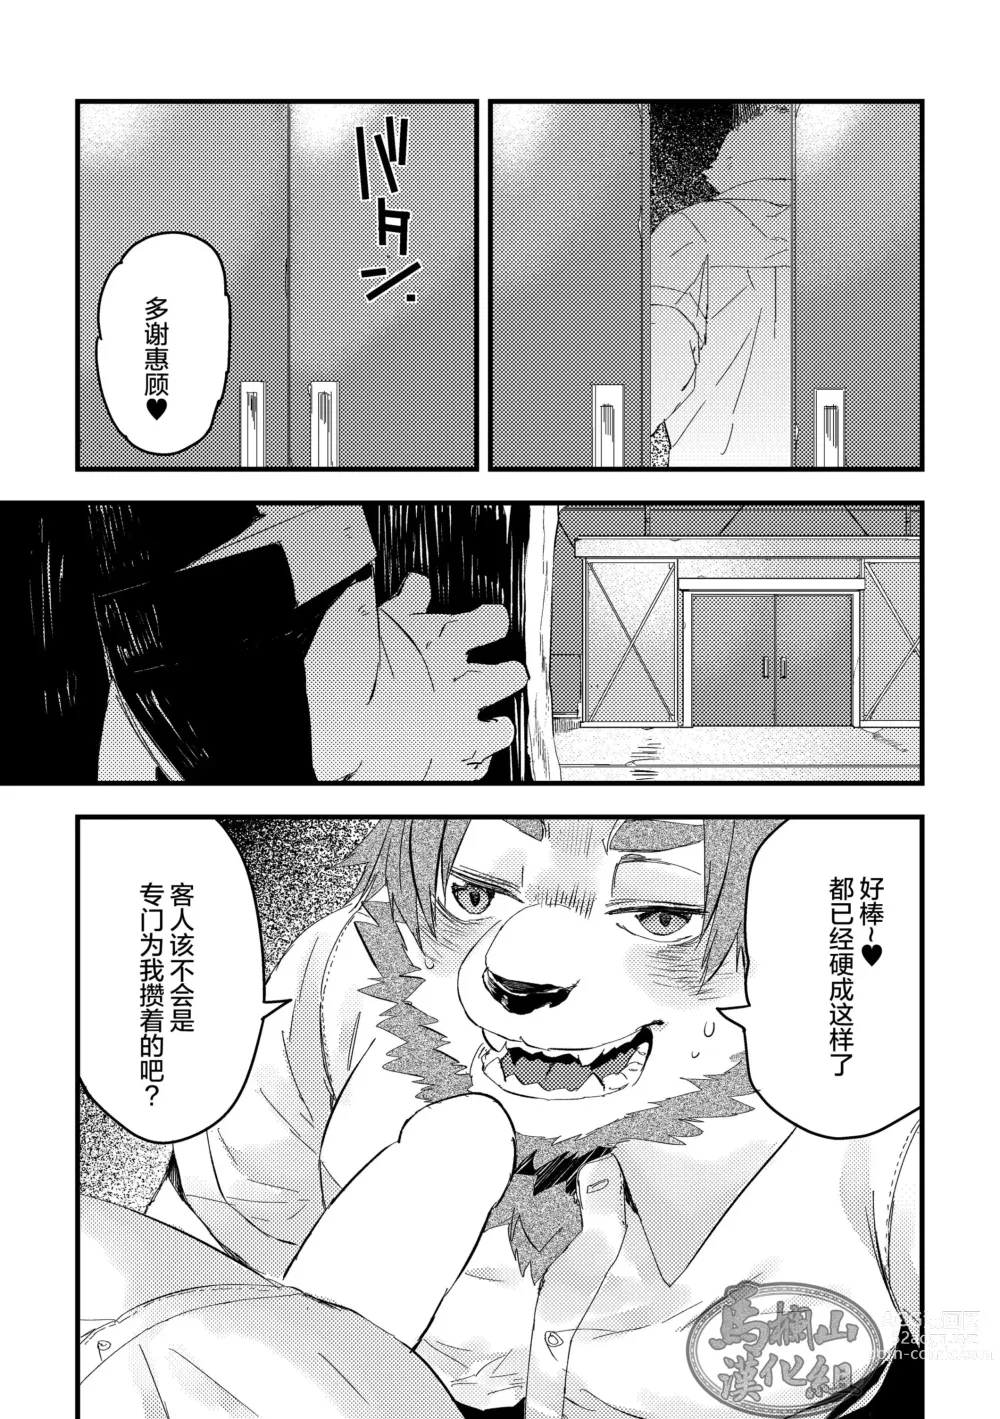 Page 4 of manga 獅子は兎を狩るのにも